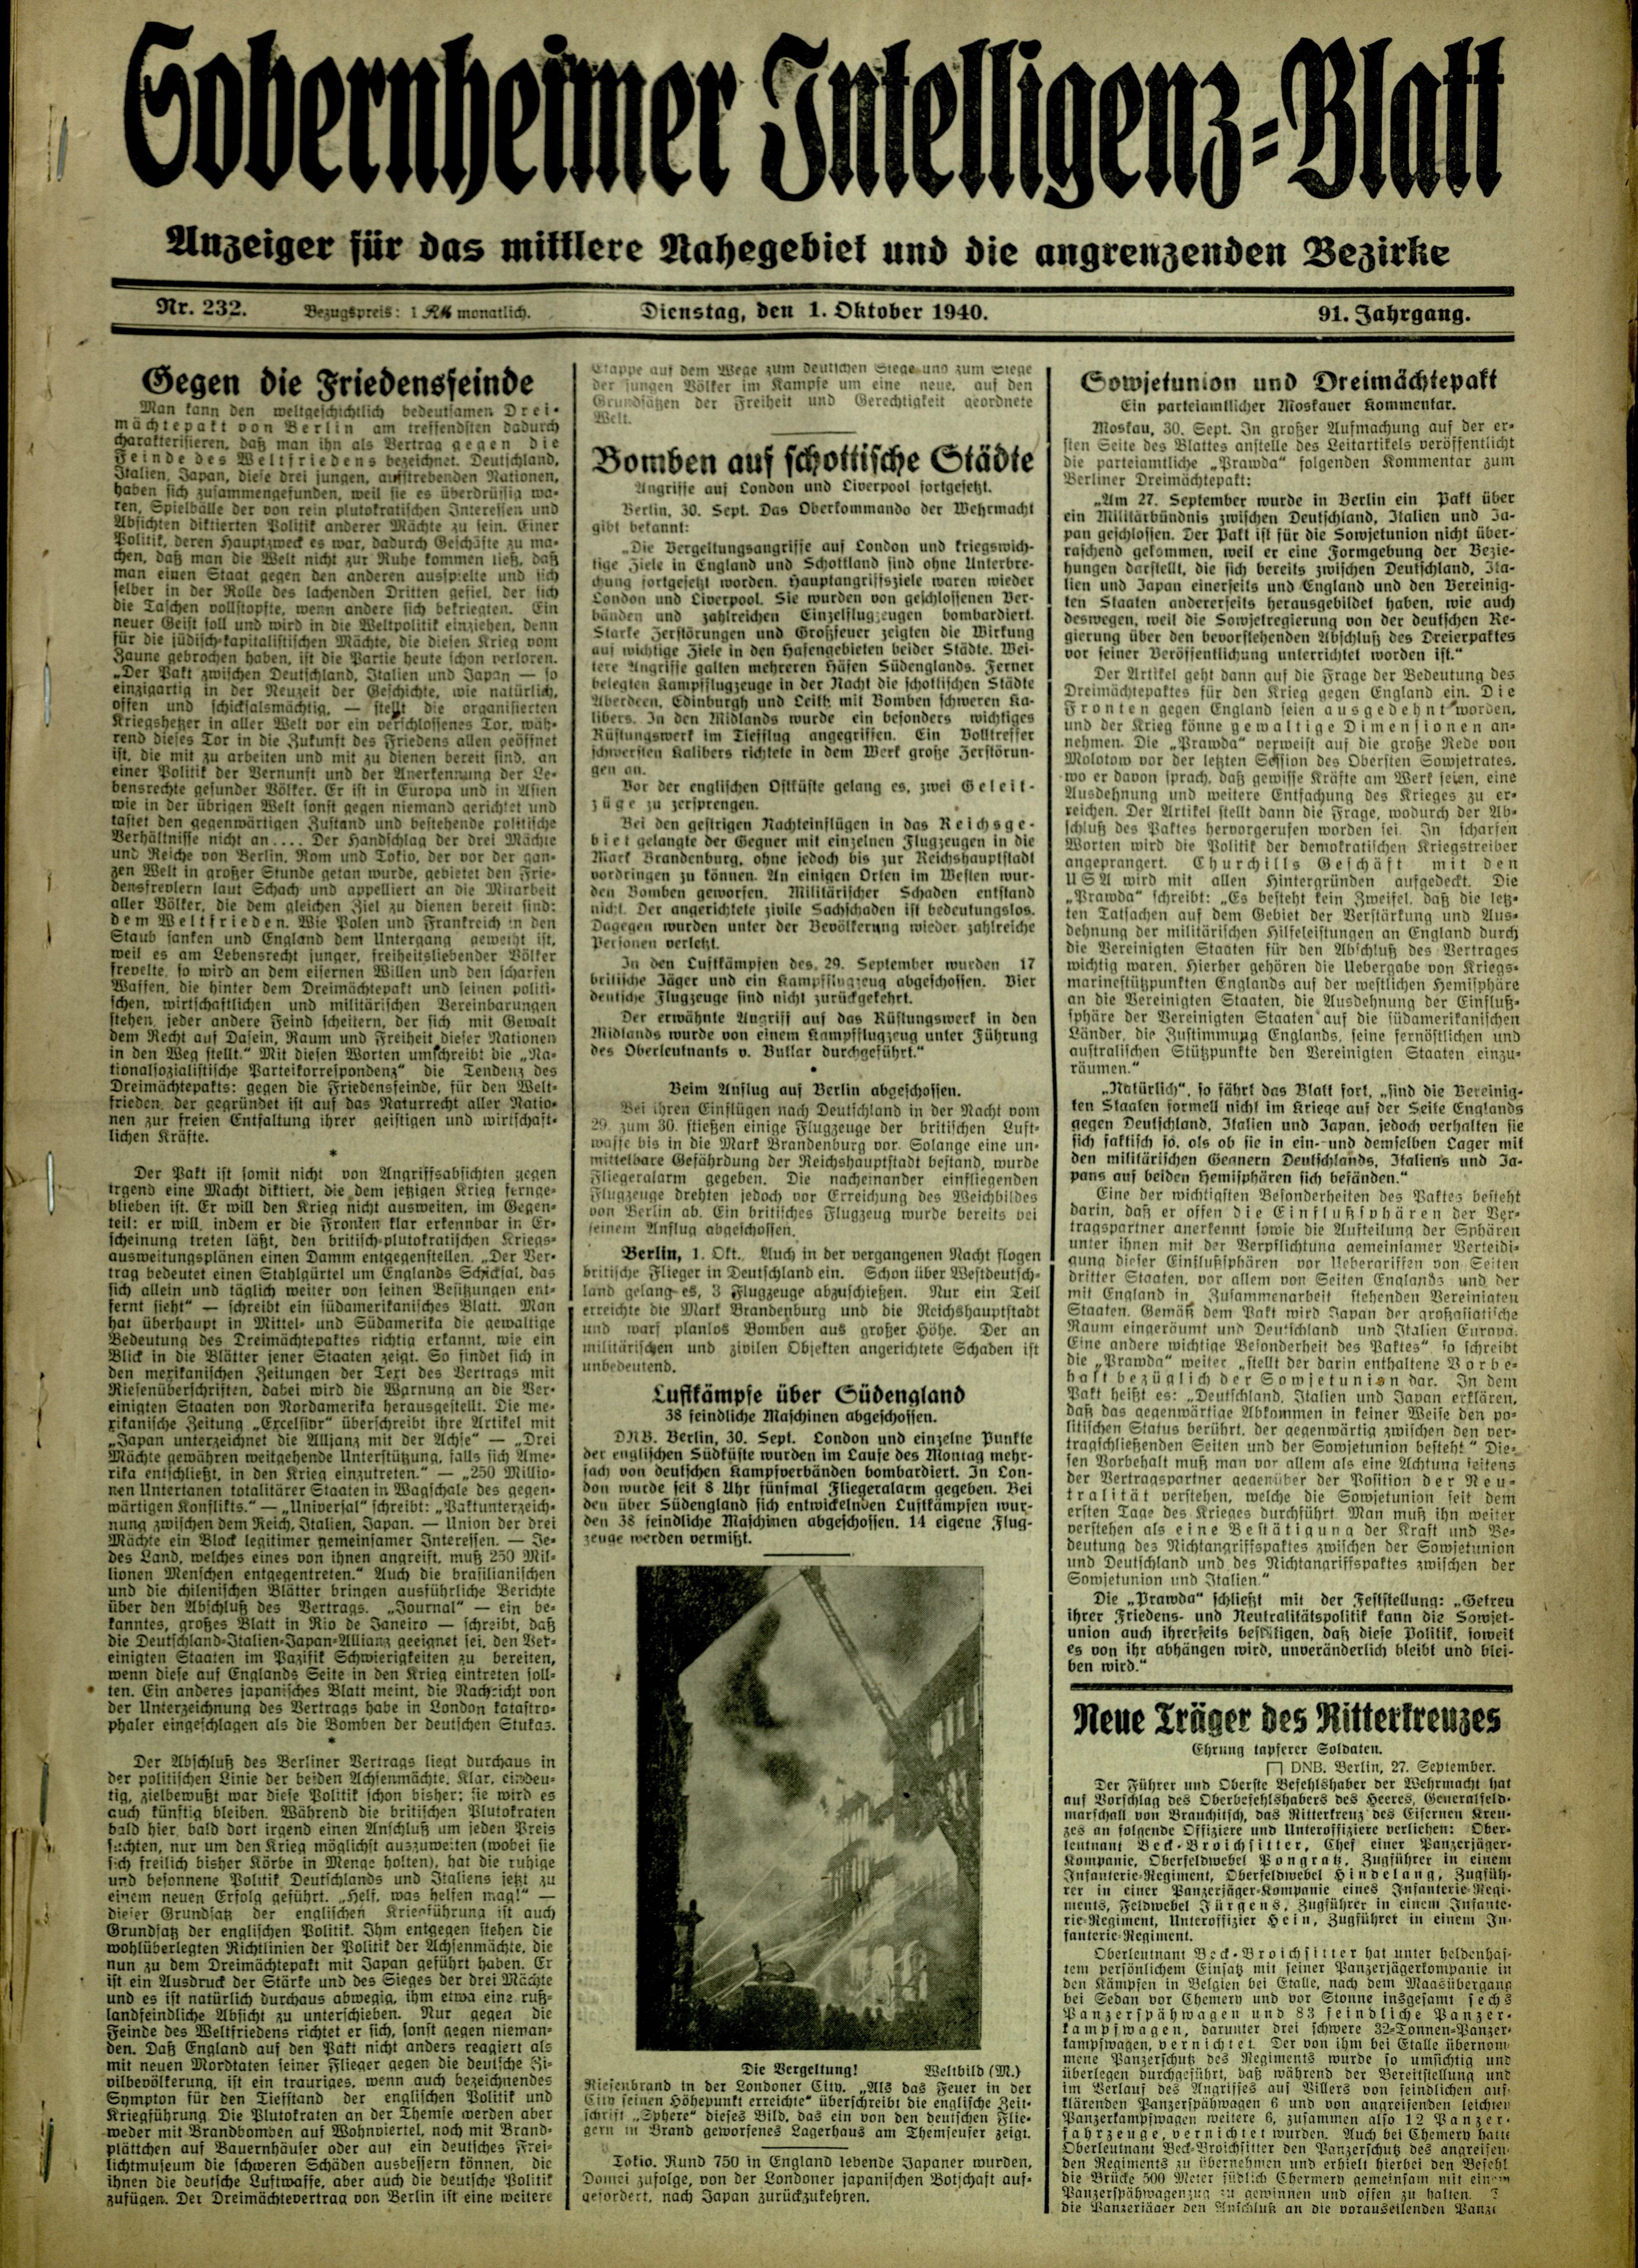 Zeitung: Sobernheimer Intelligenzblatt; Okjtober 1940, Jg. 91 Nr. 232 (Heimatmuseum Bad Sobernheim CC BY-NC-SA)